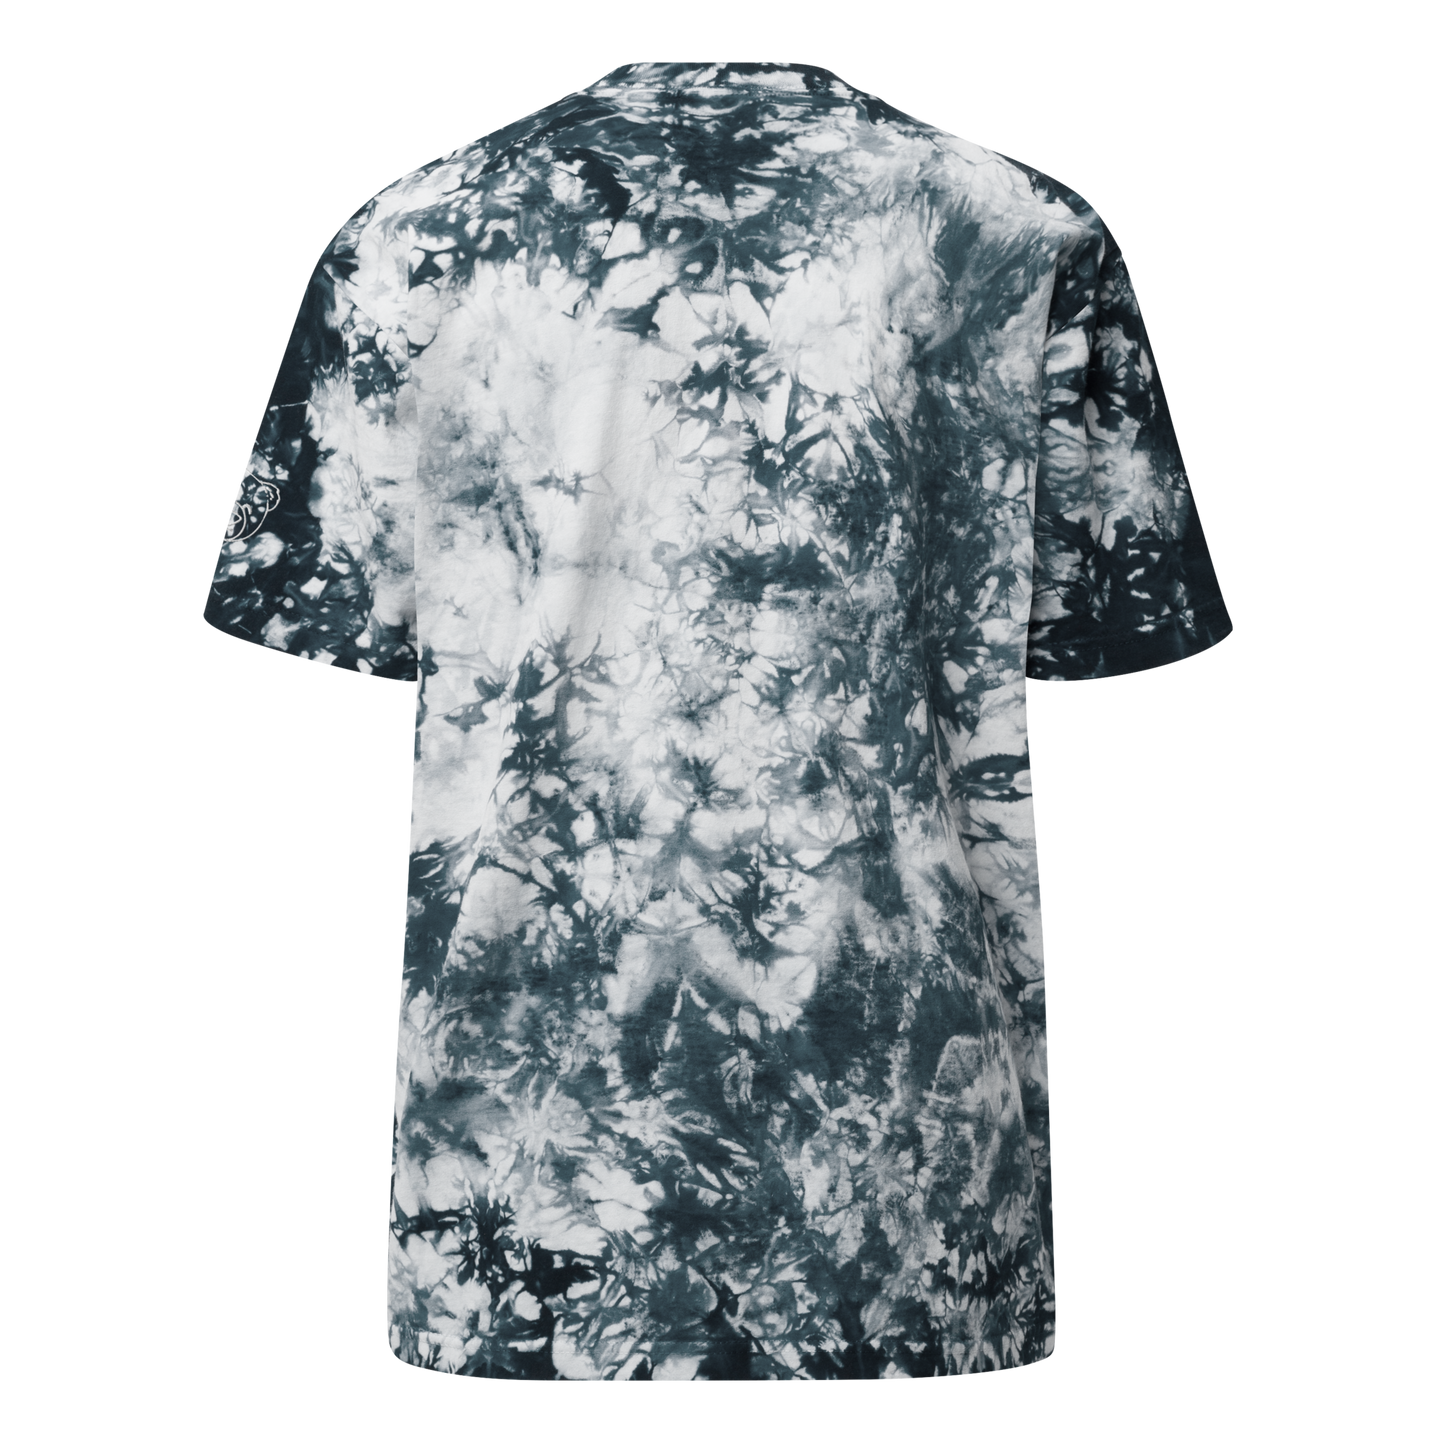 WeBearish Unisex Oversized Tie-Dye Embroidered T-Shirt